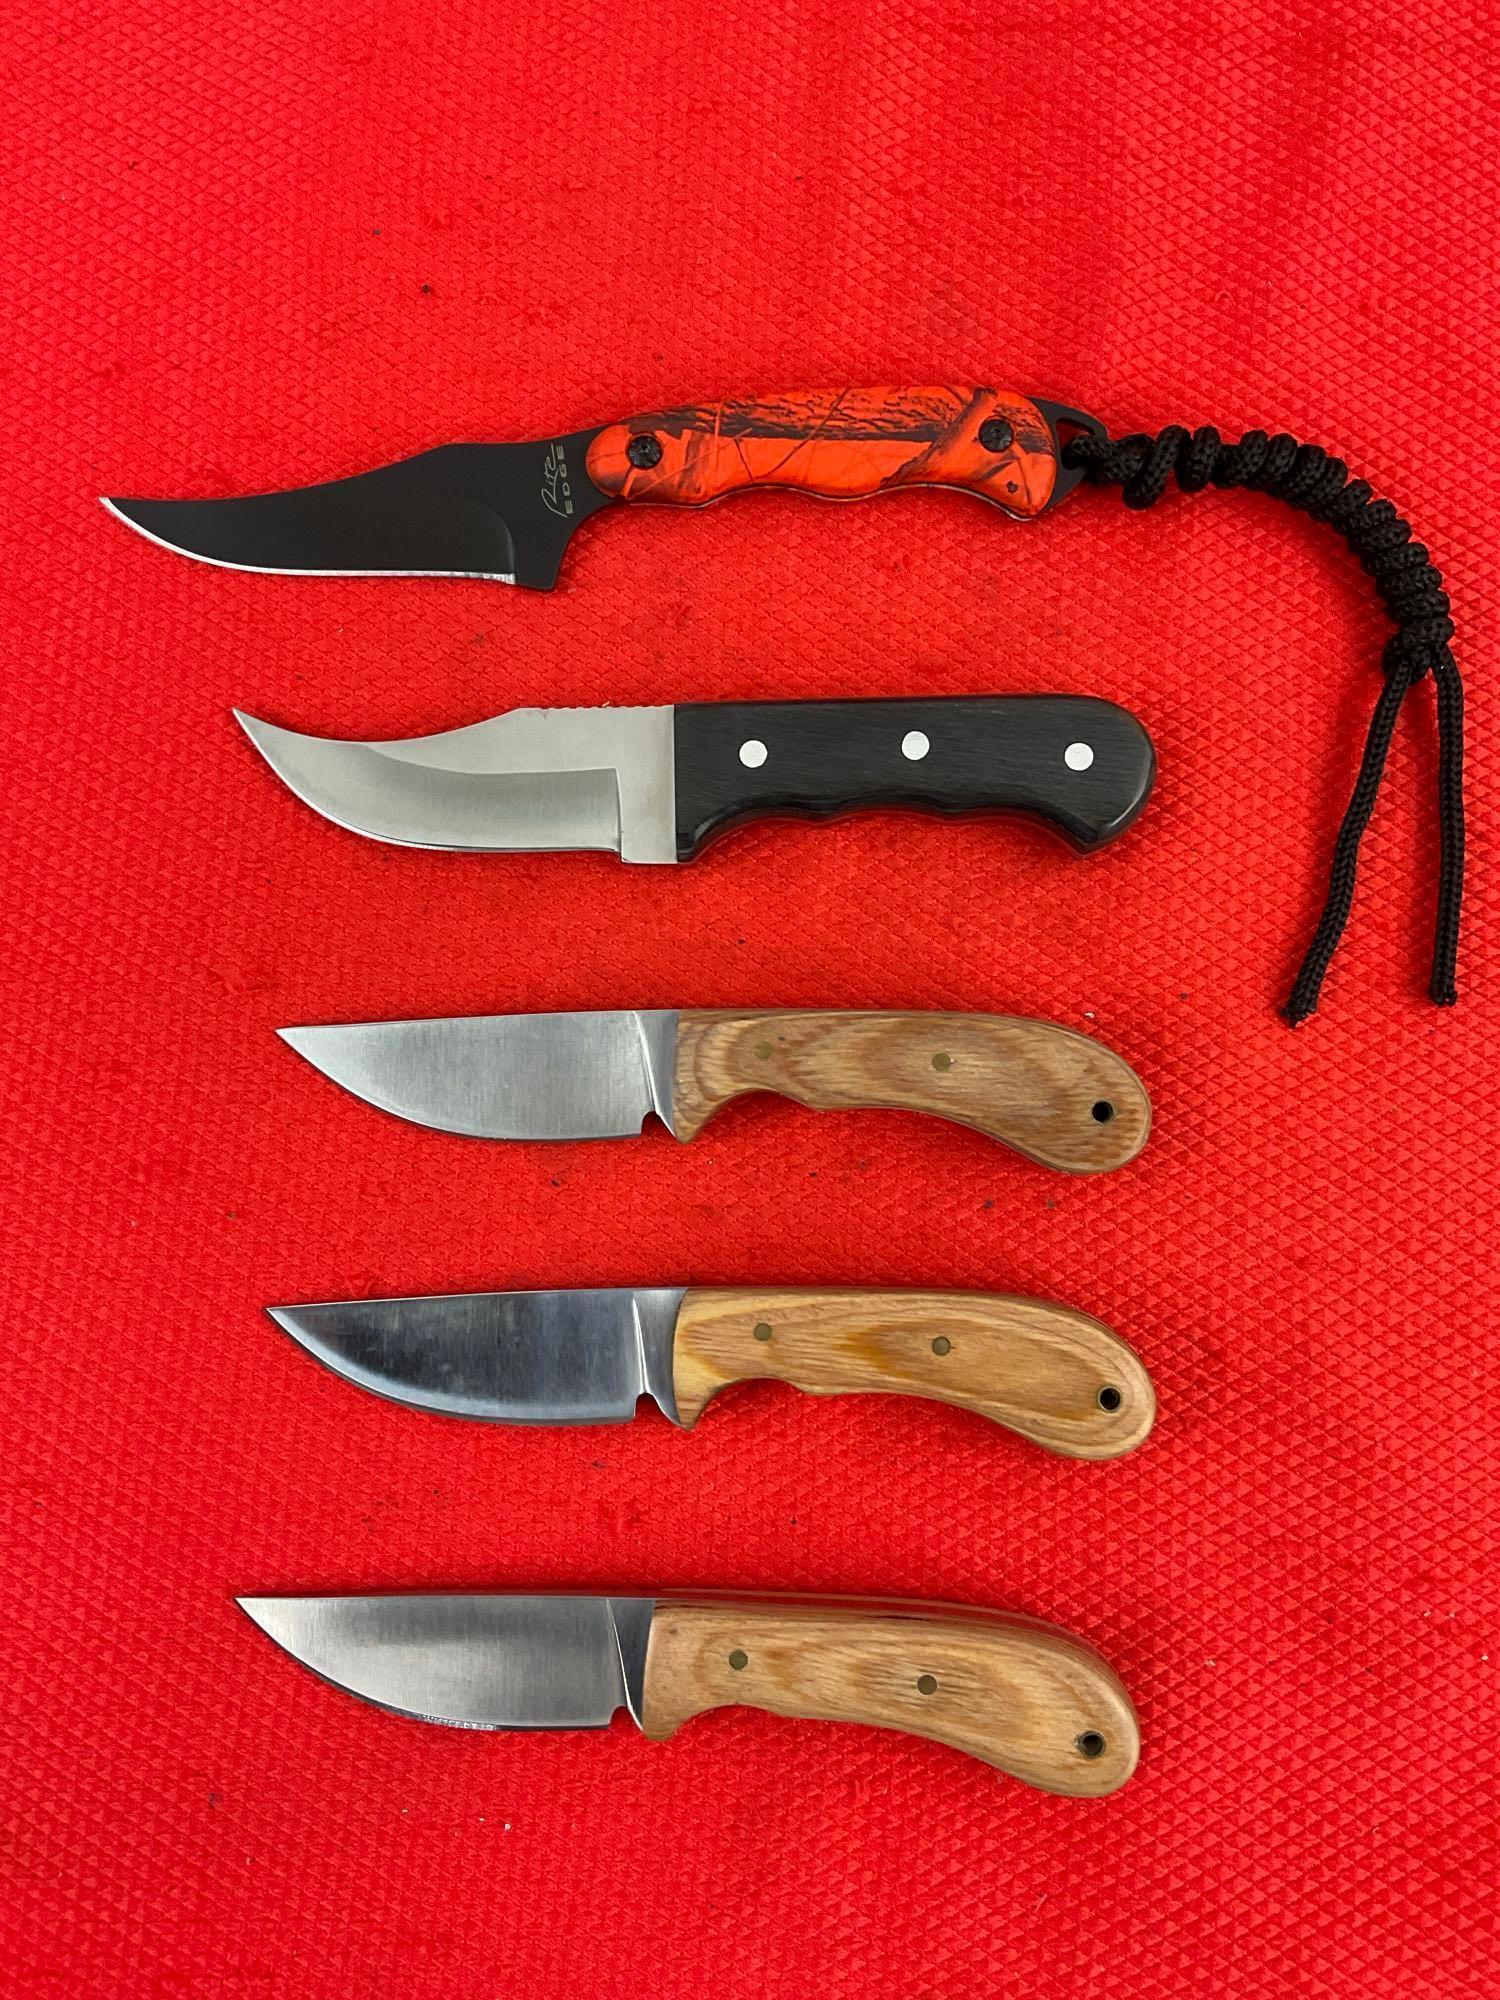 5 pcs Modern Steel Fixed Blade Hunting Knife Assortment. 1x Rite Edge, 4x Unknown. See pics.